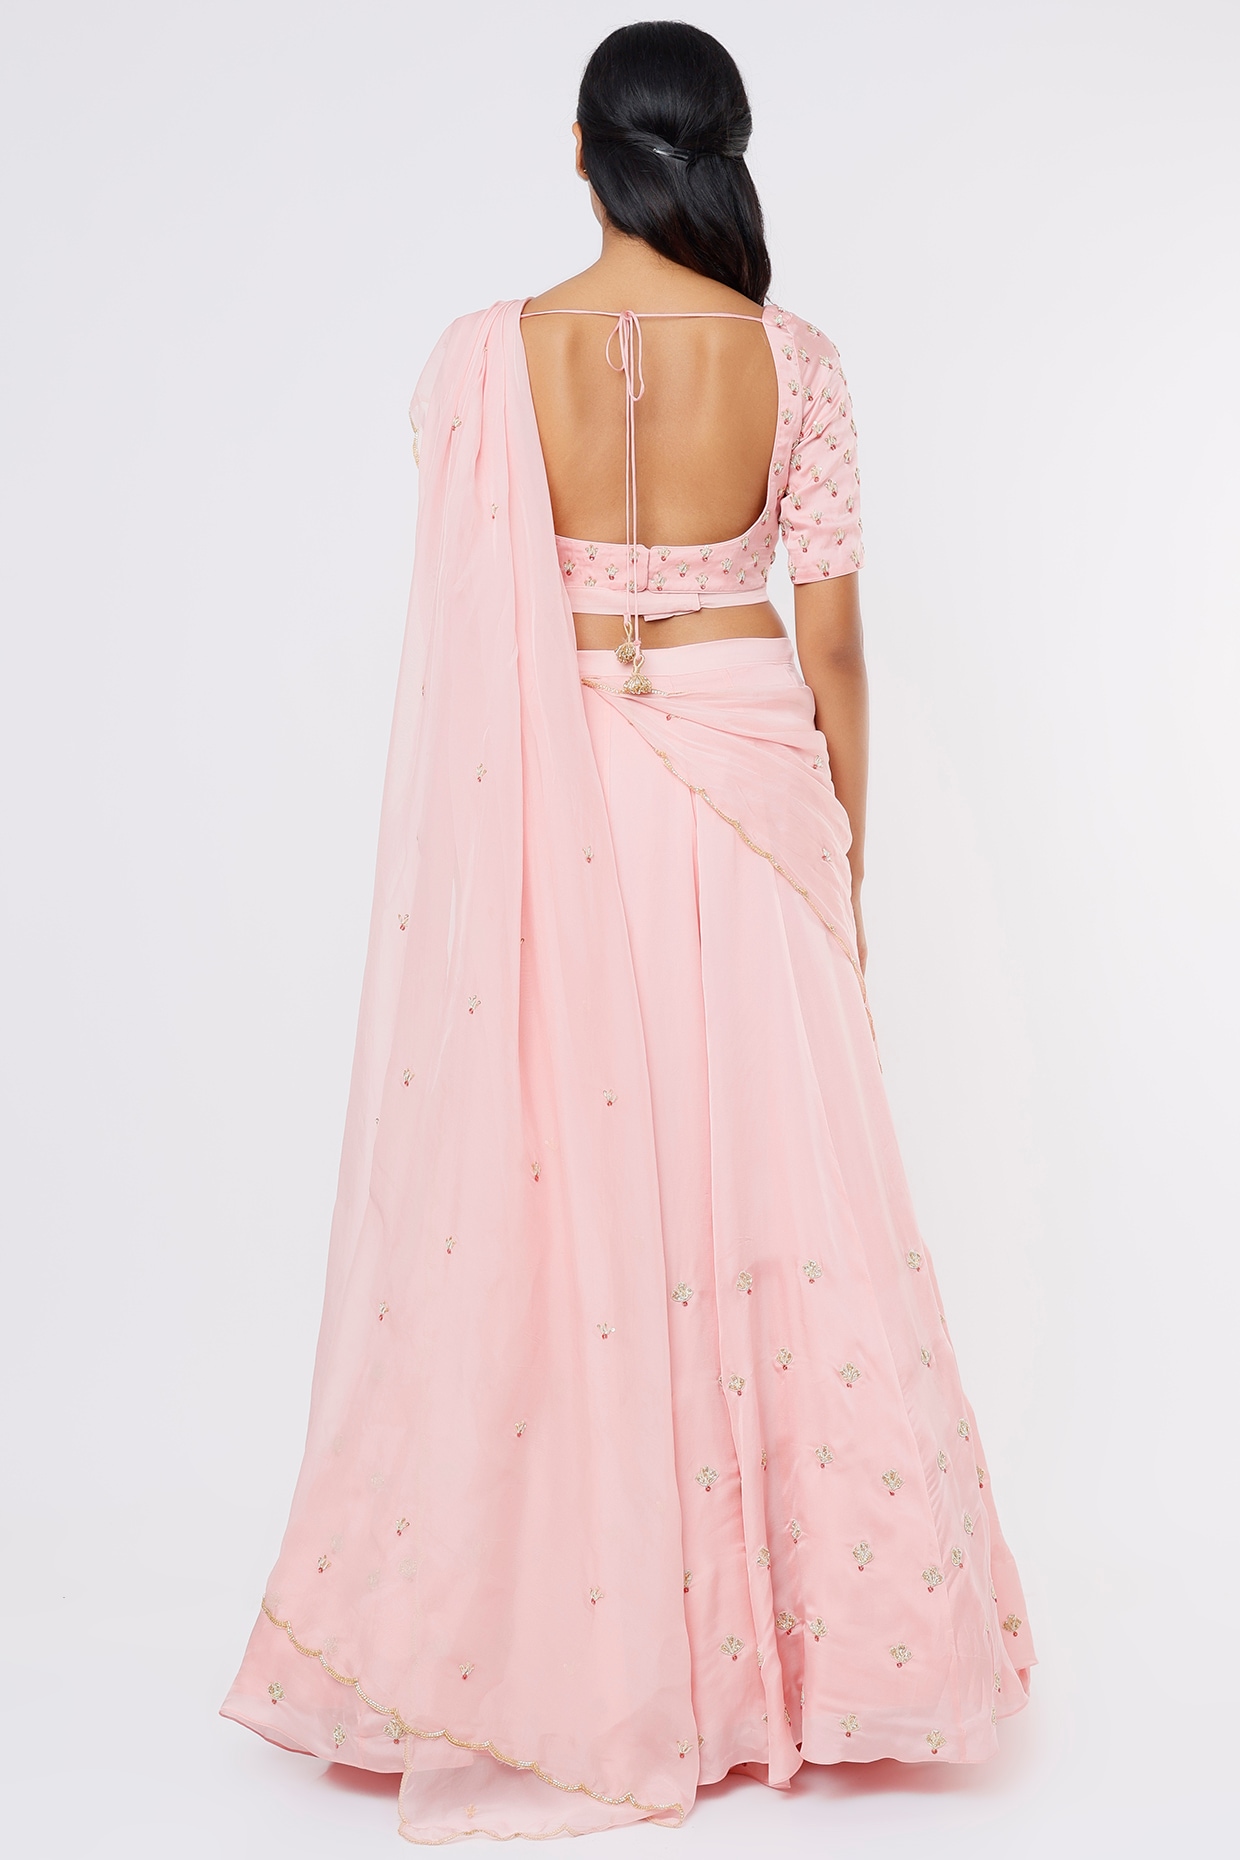 Net Designer Saree In Baby Pink Colour - SR4690619